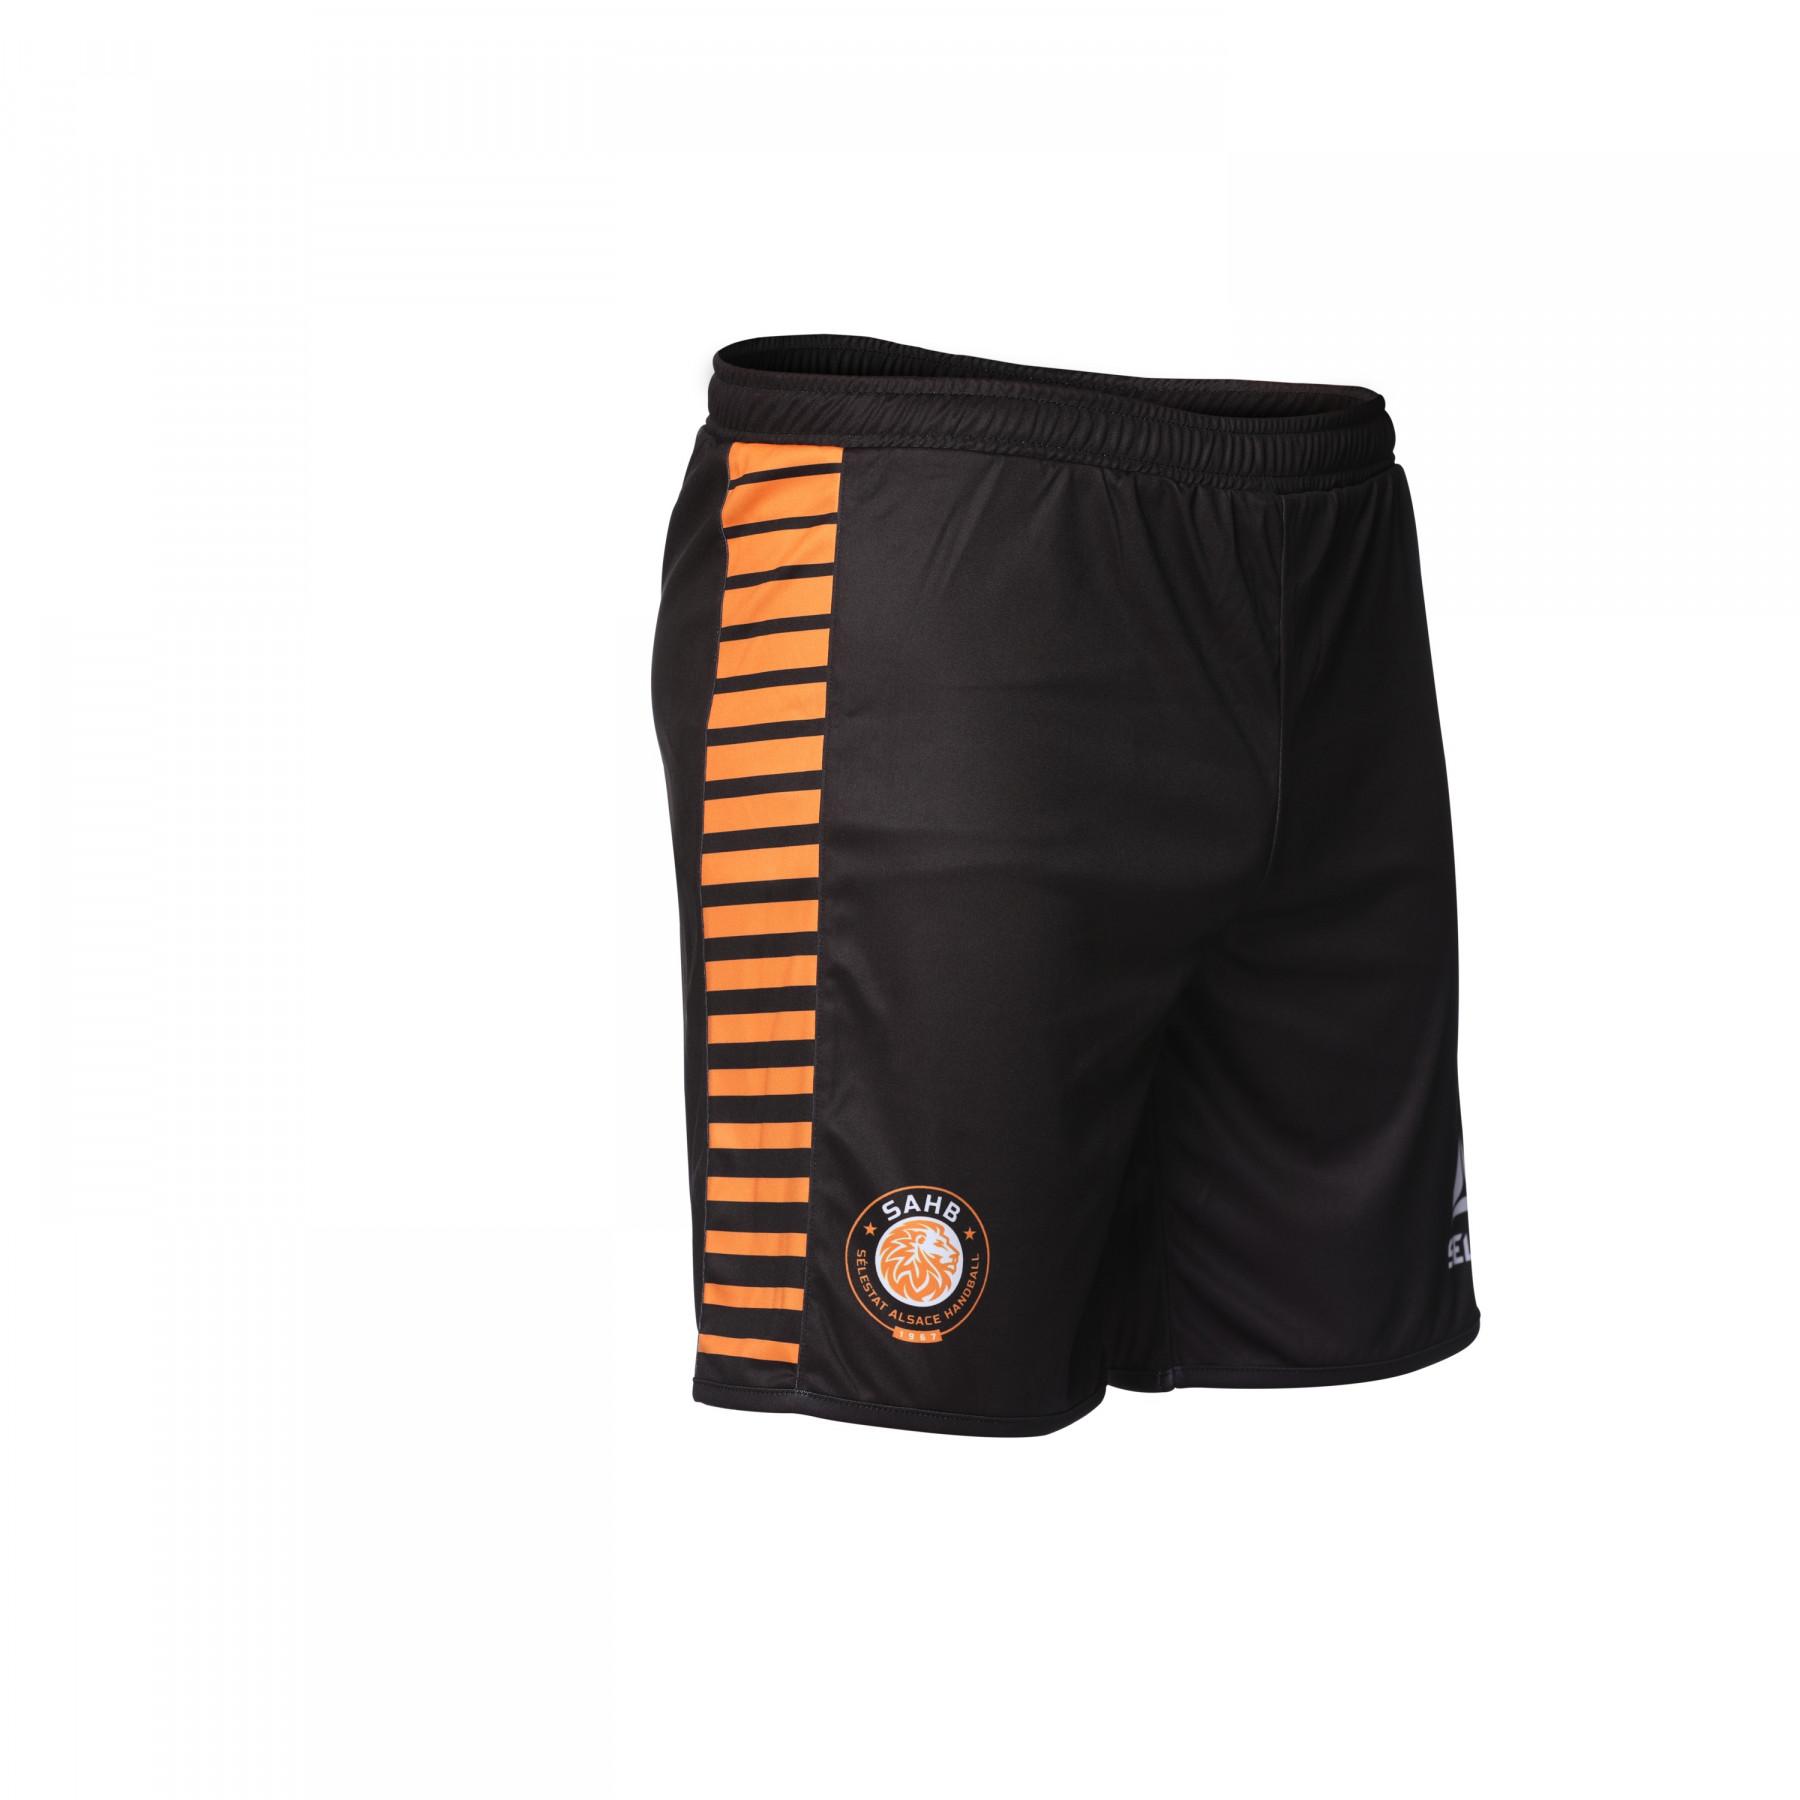 Warm-up shorts for children Sélestat Alsace Handball 2018/19